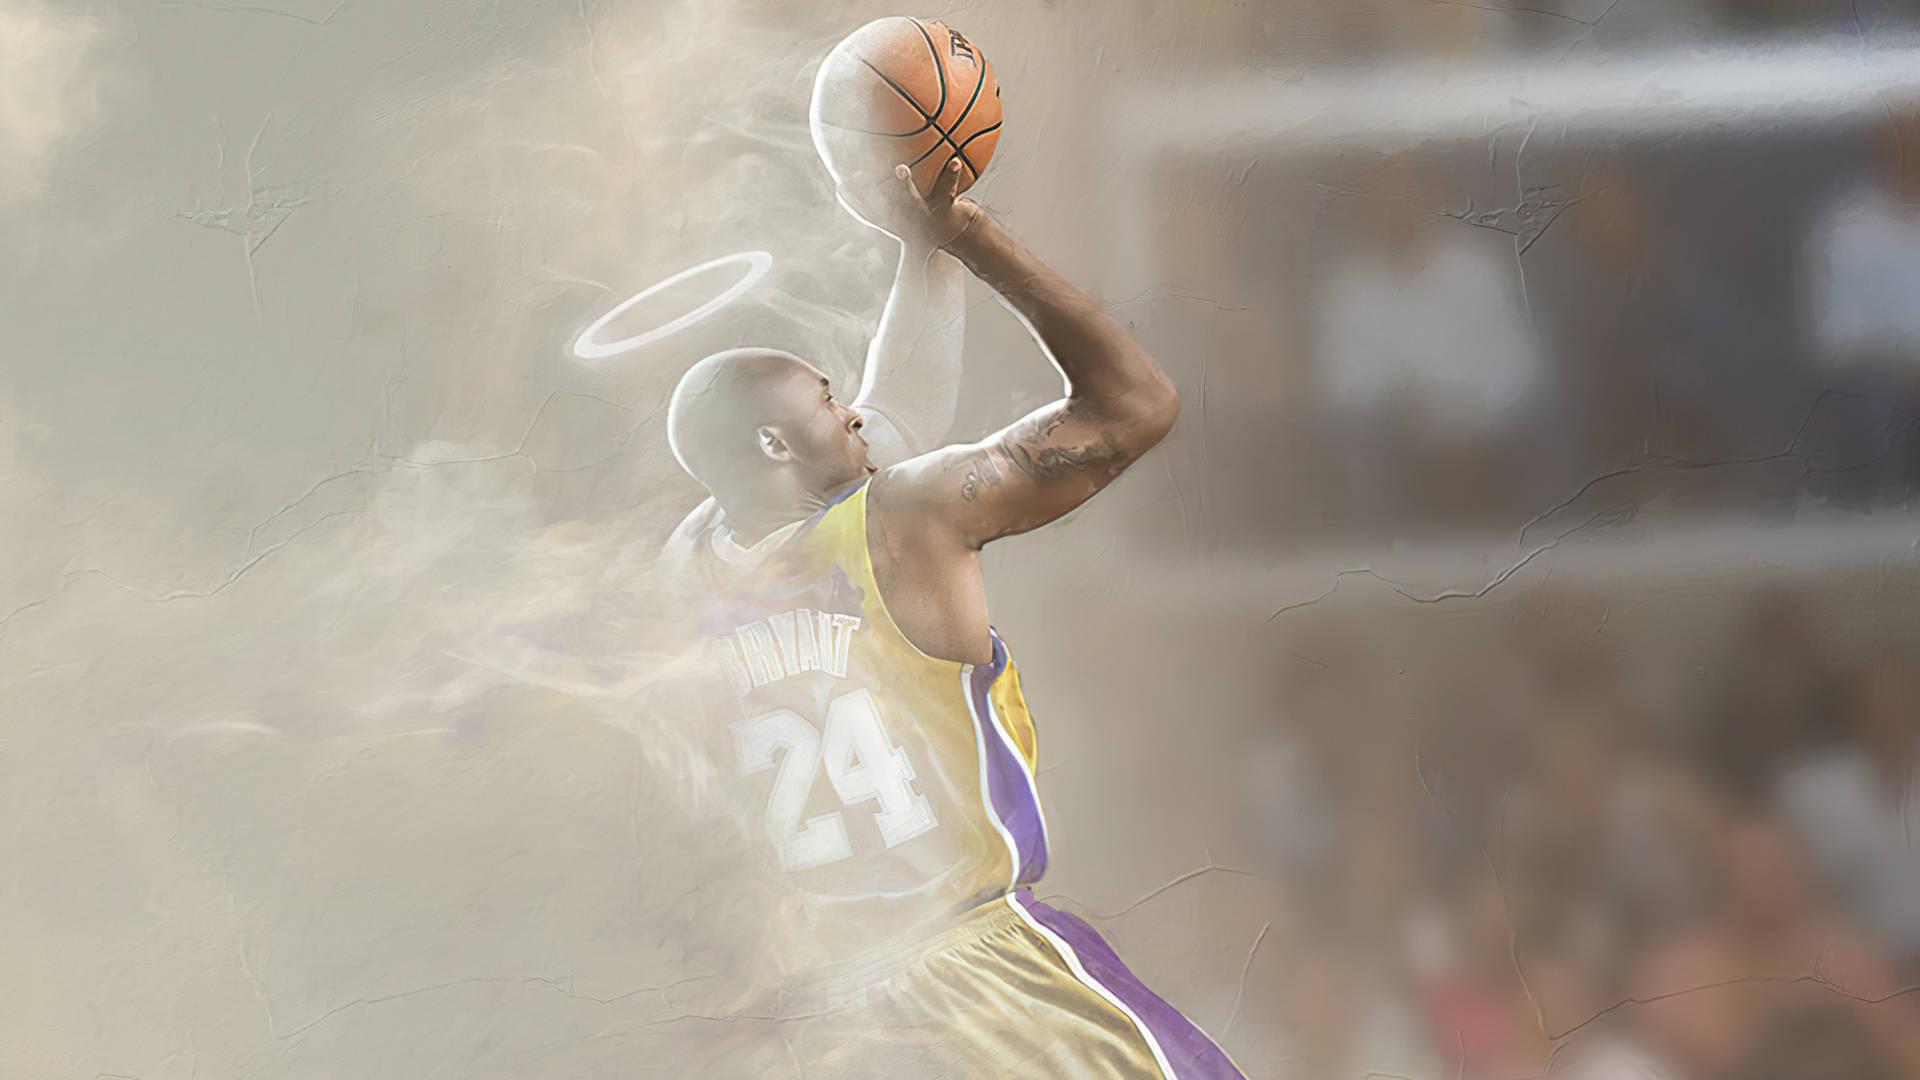 A Tribute To Kobe Bryant - The Black Mamba Background